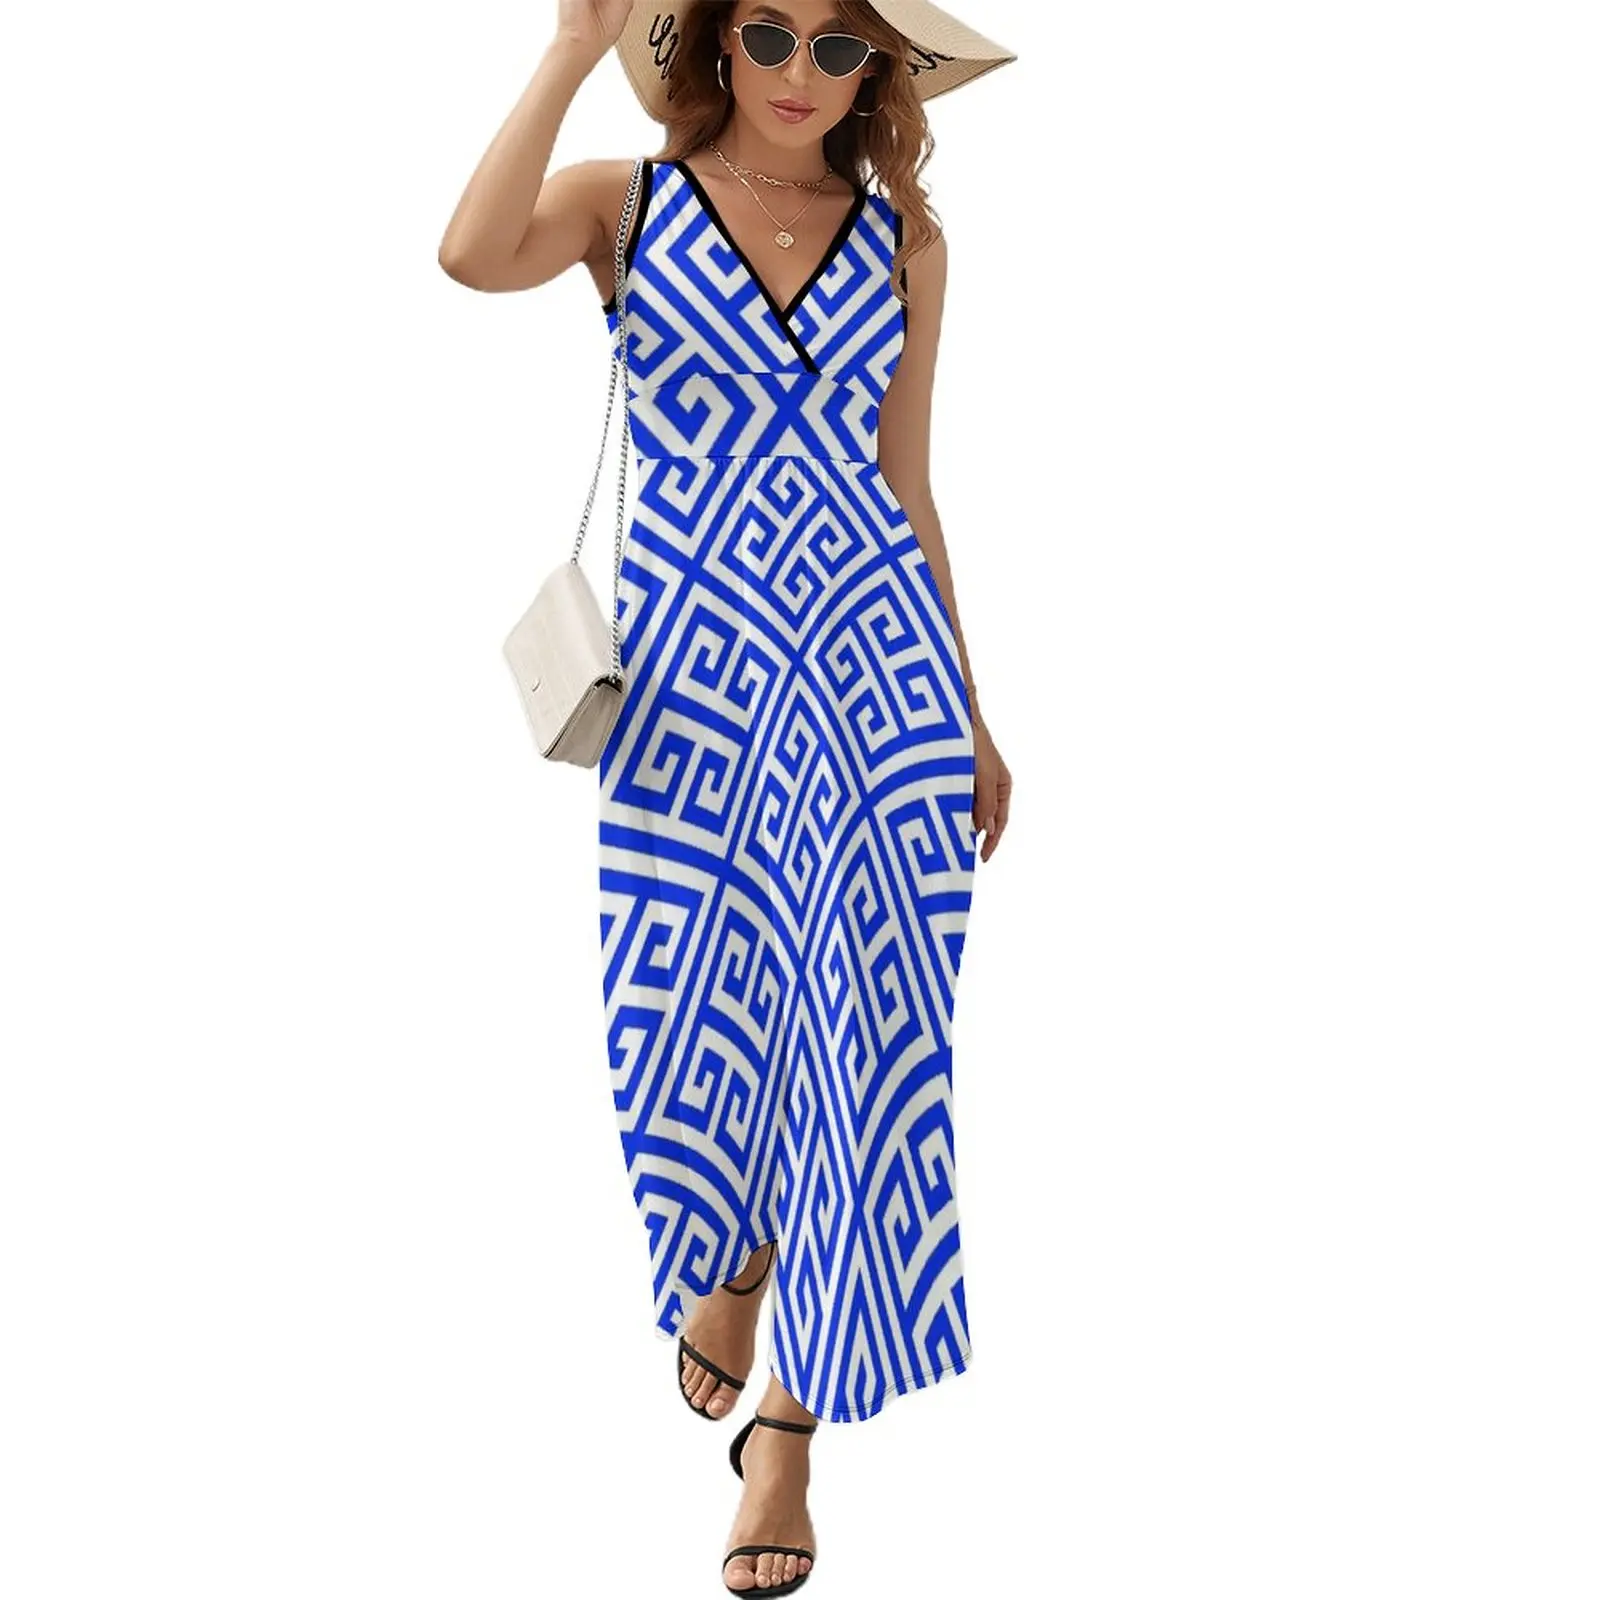 

blue white pattern, Greek Key pattern -Greek fret design Sleeveless Dress long dress women Dress for girls prom dresses